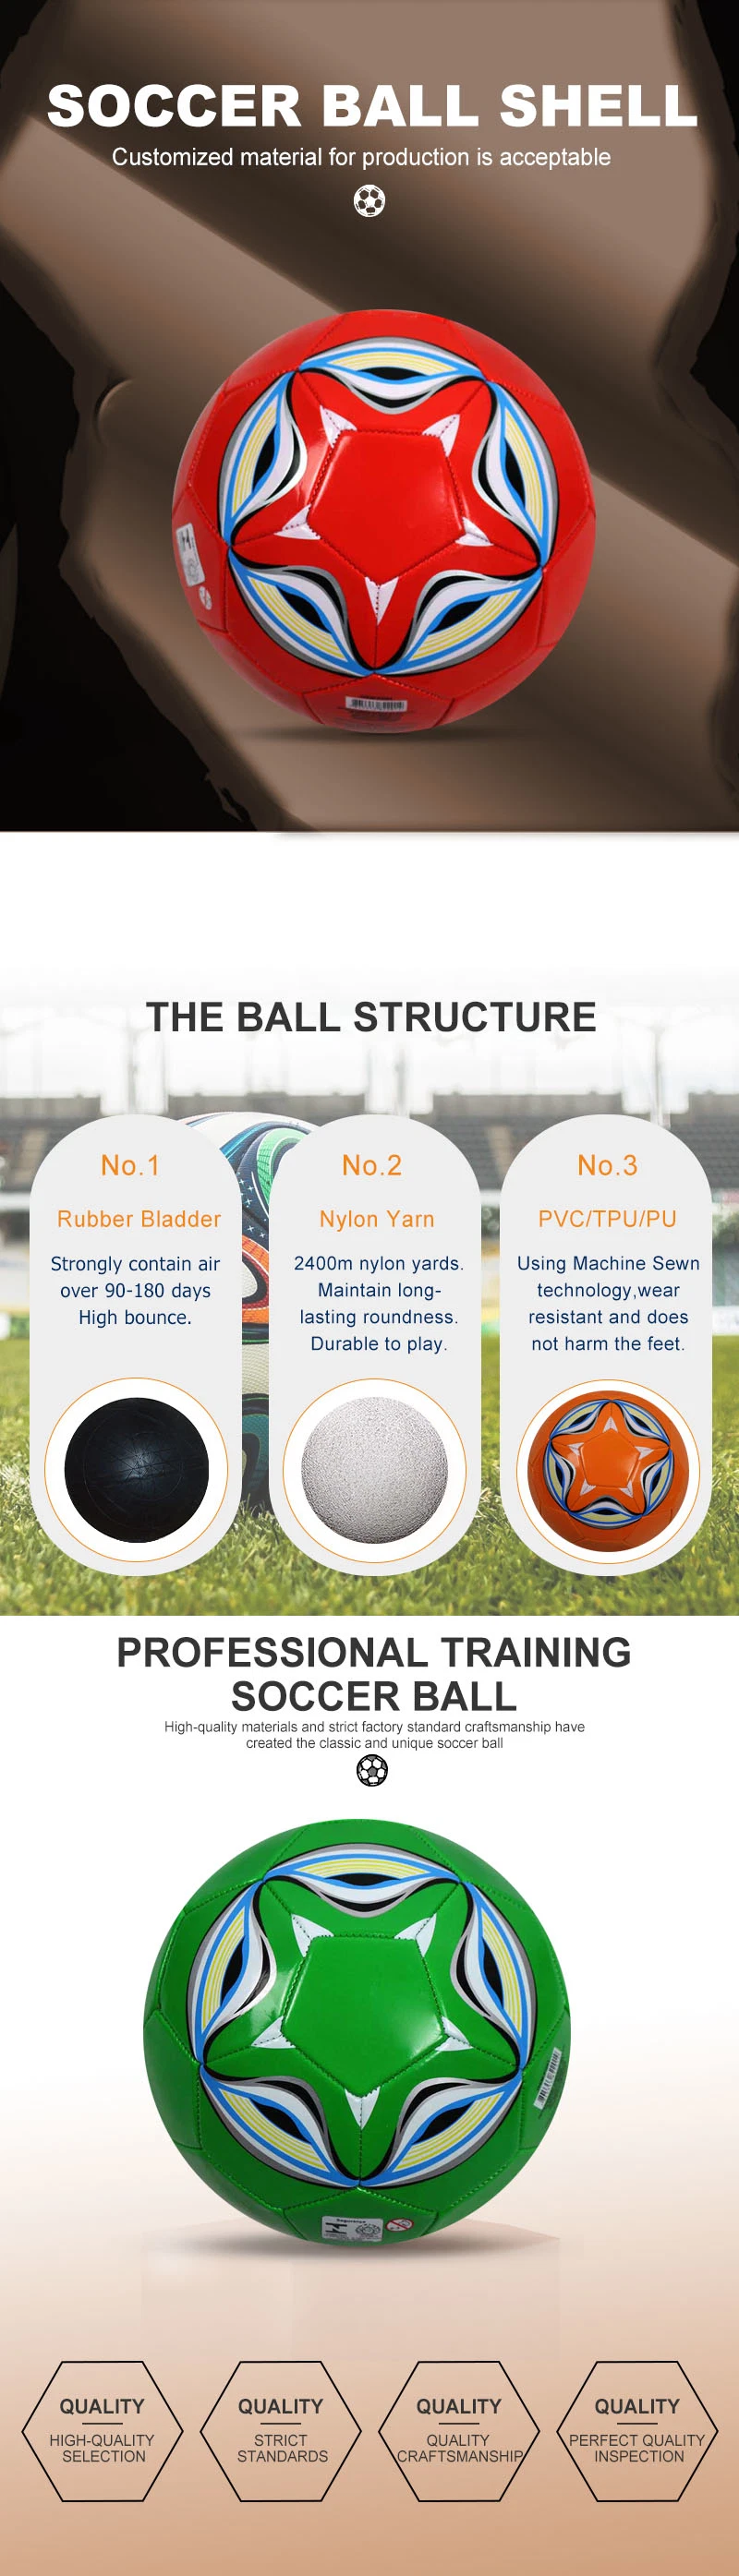 Size 5 Football PVC Leather Machine Stitched Soccer Ball